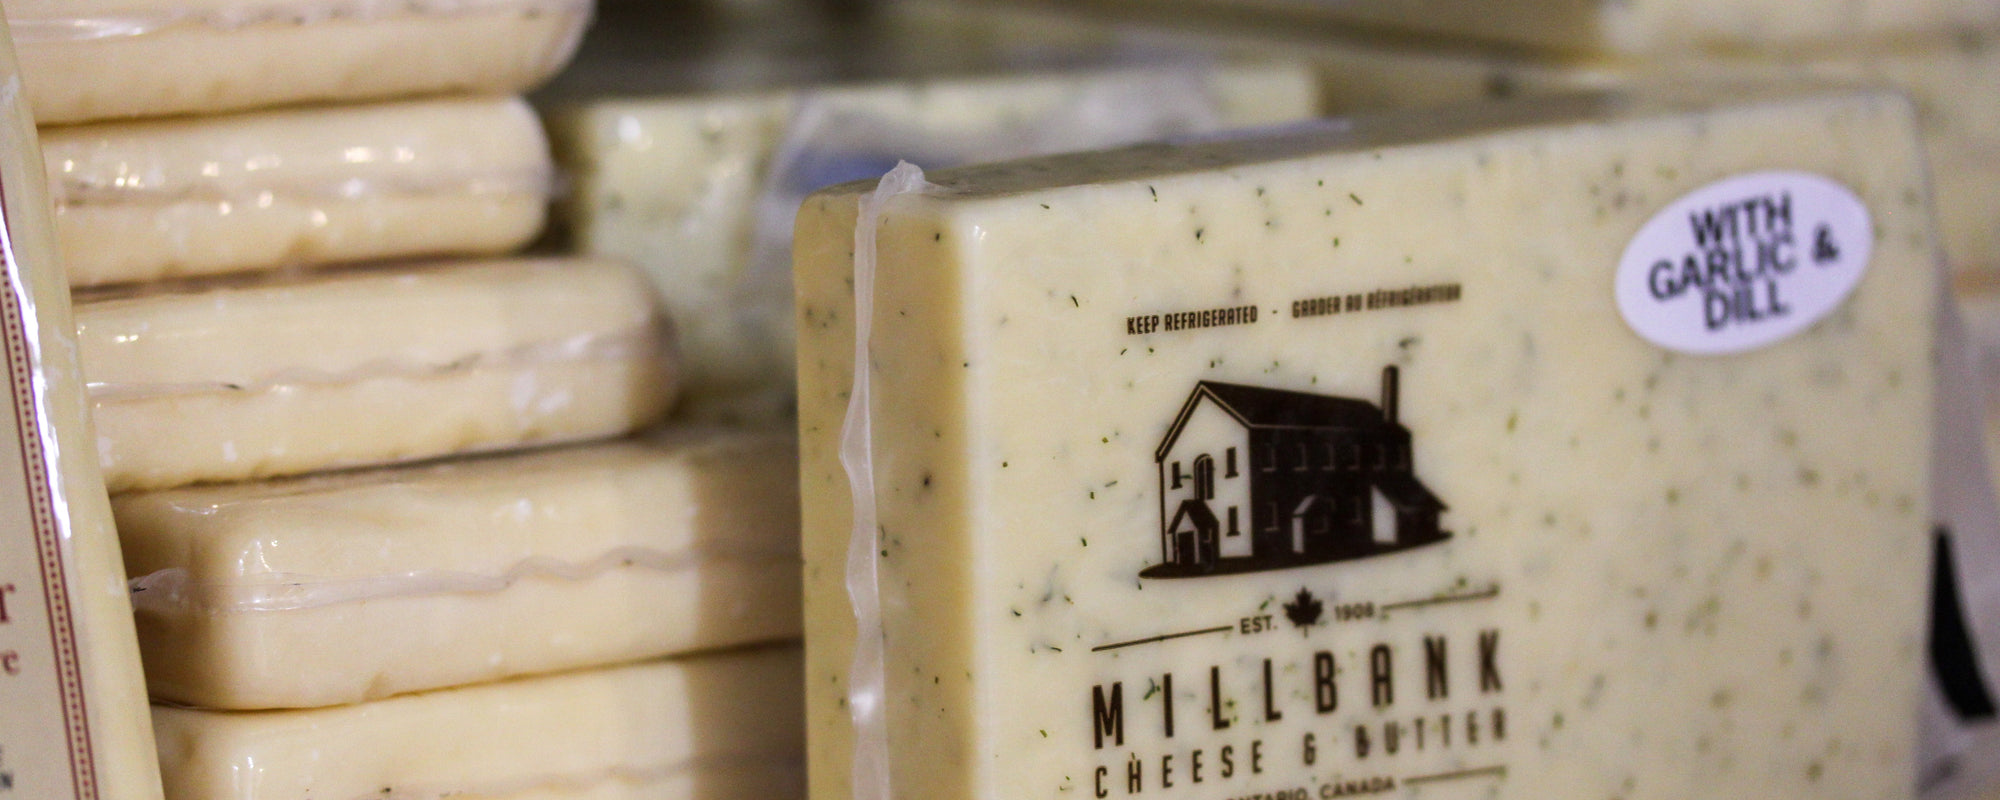 Millbank Cheese